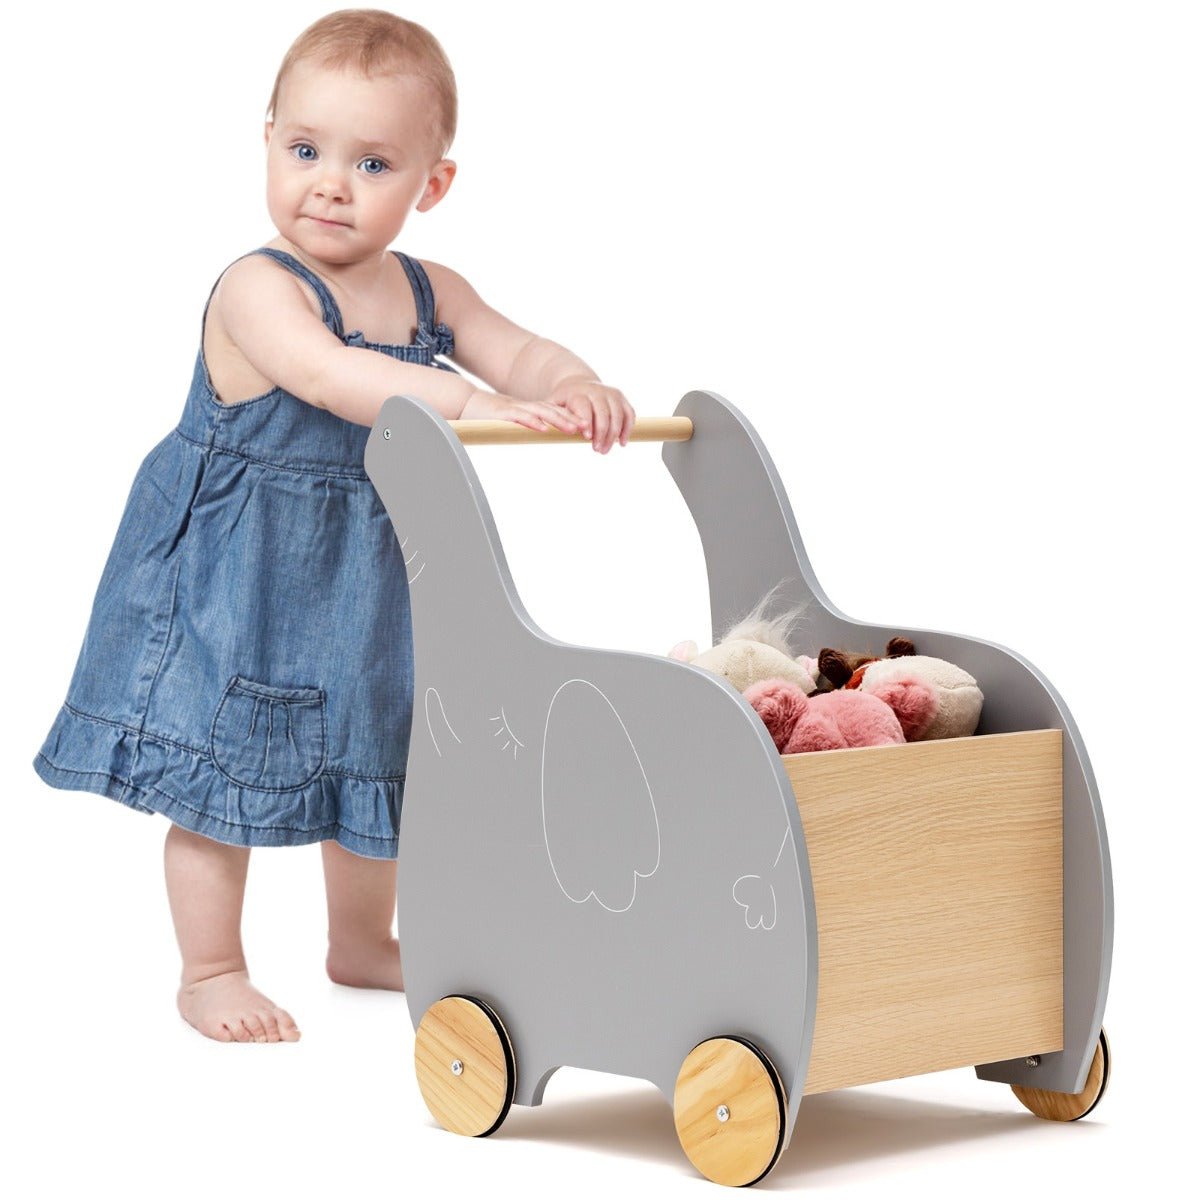 Children's Wooden Shopping Trolley - Rubber Wheels, Imaginative Shopping